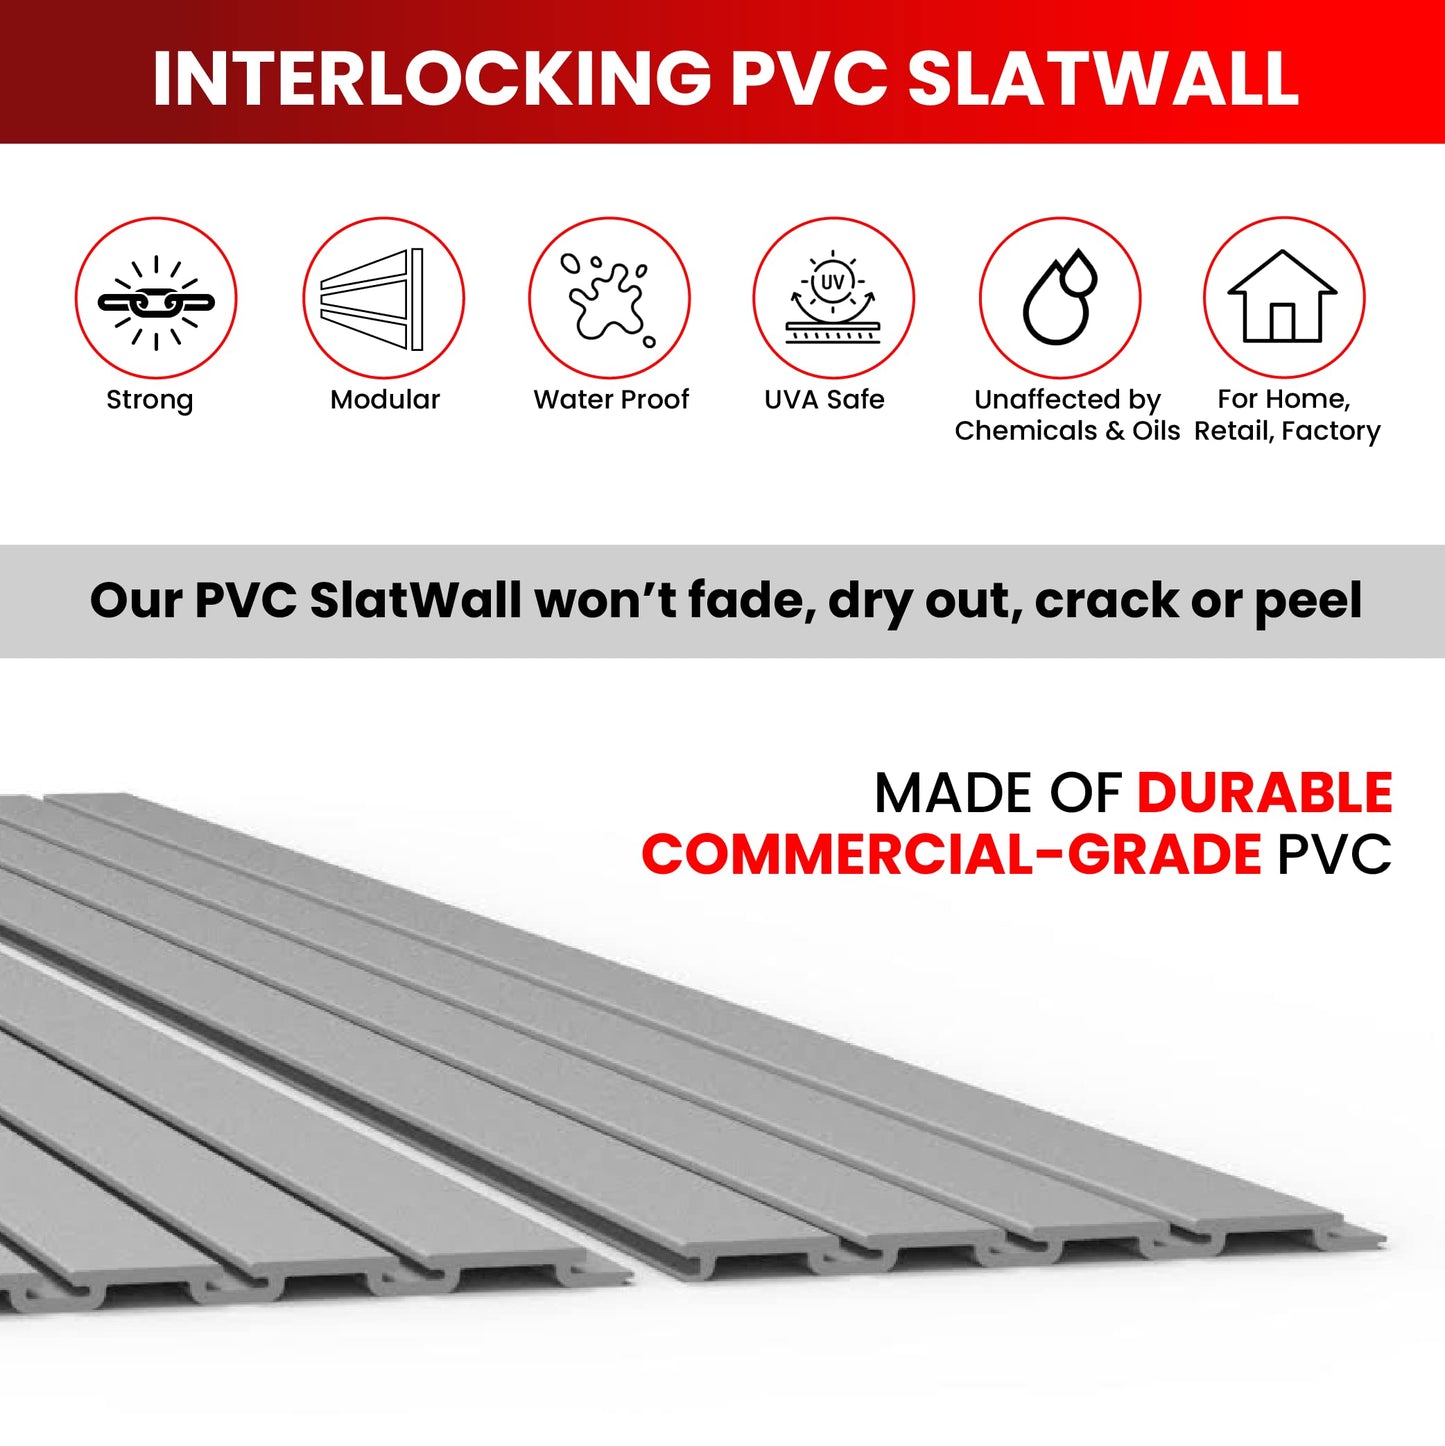 Slatwall Panel Garage Wall Organizer: Heavy Duty Wall Mounted PVC Wall Rack, Interlocking Slat Wall Paneling for Garage Wall Storage, Slatwall Board,